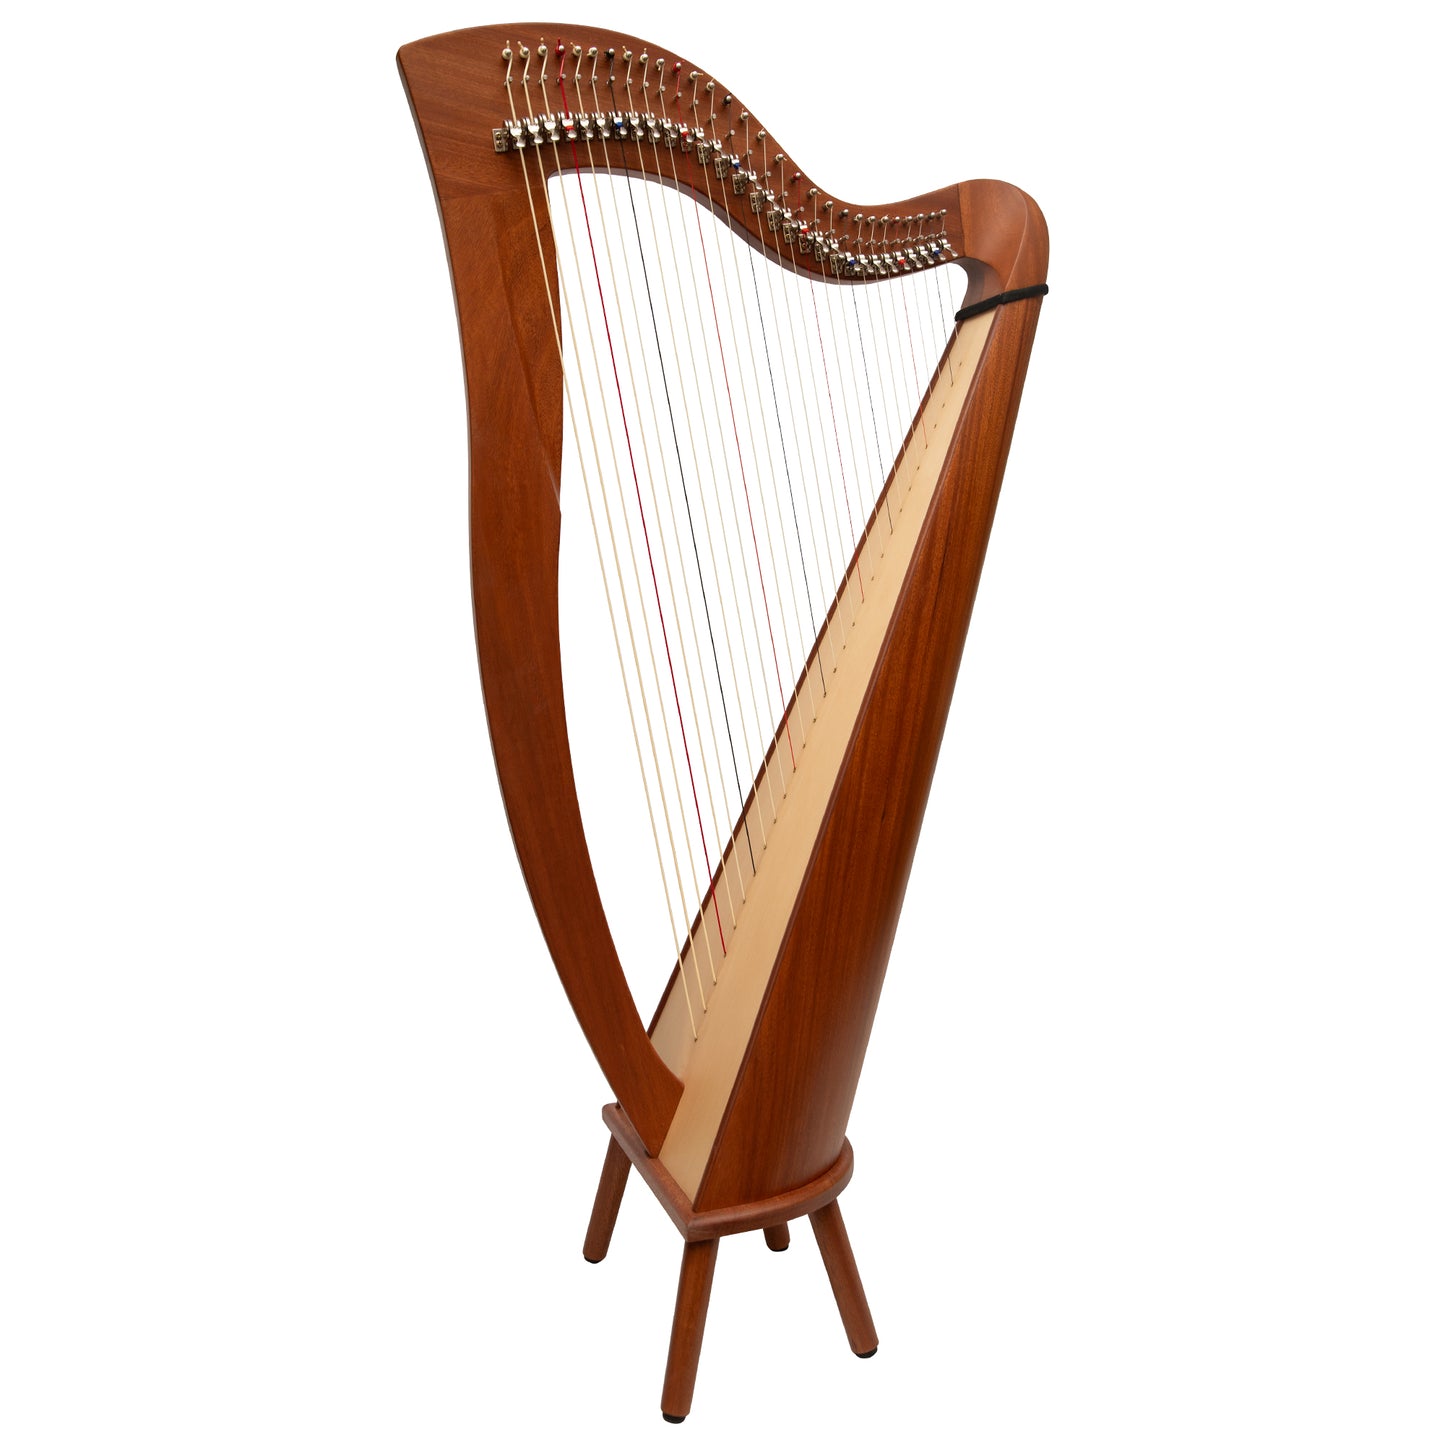 McHugh Harp 29 String Mahogany Roundback